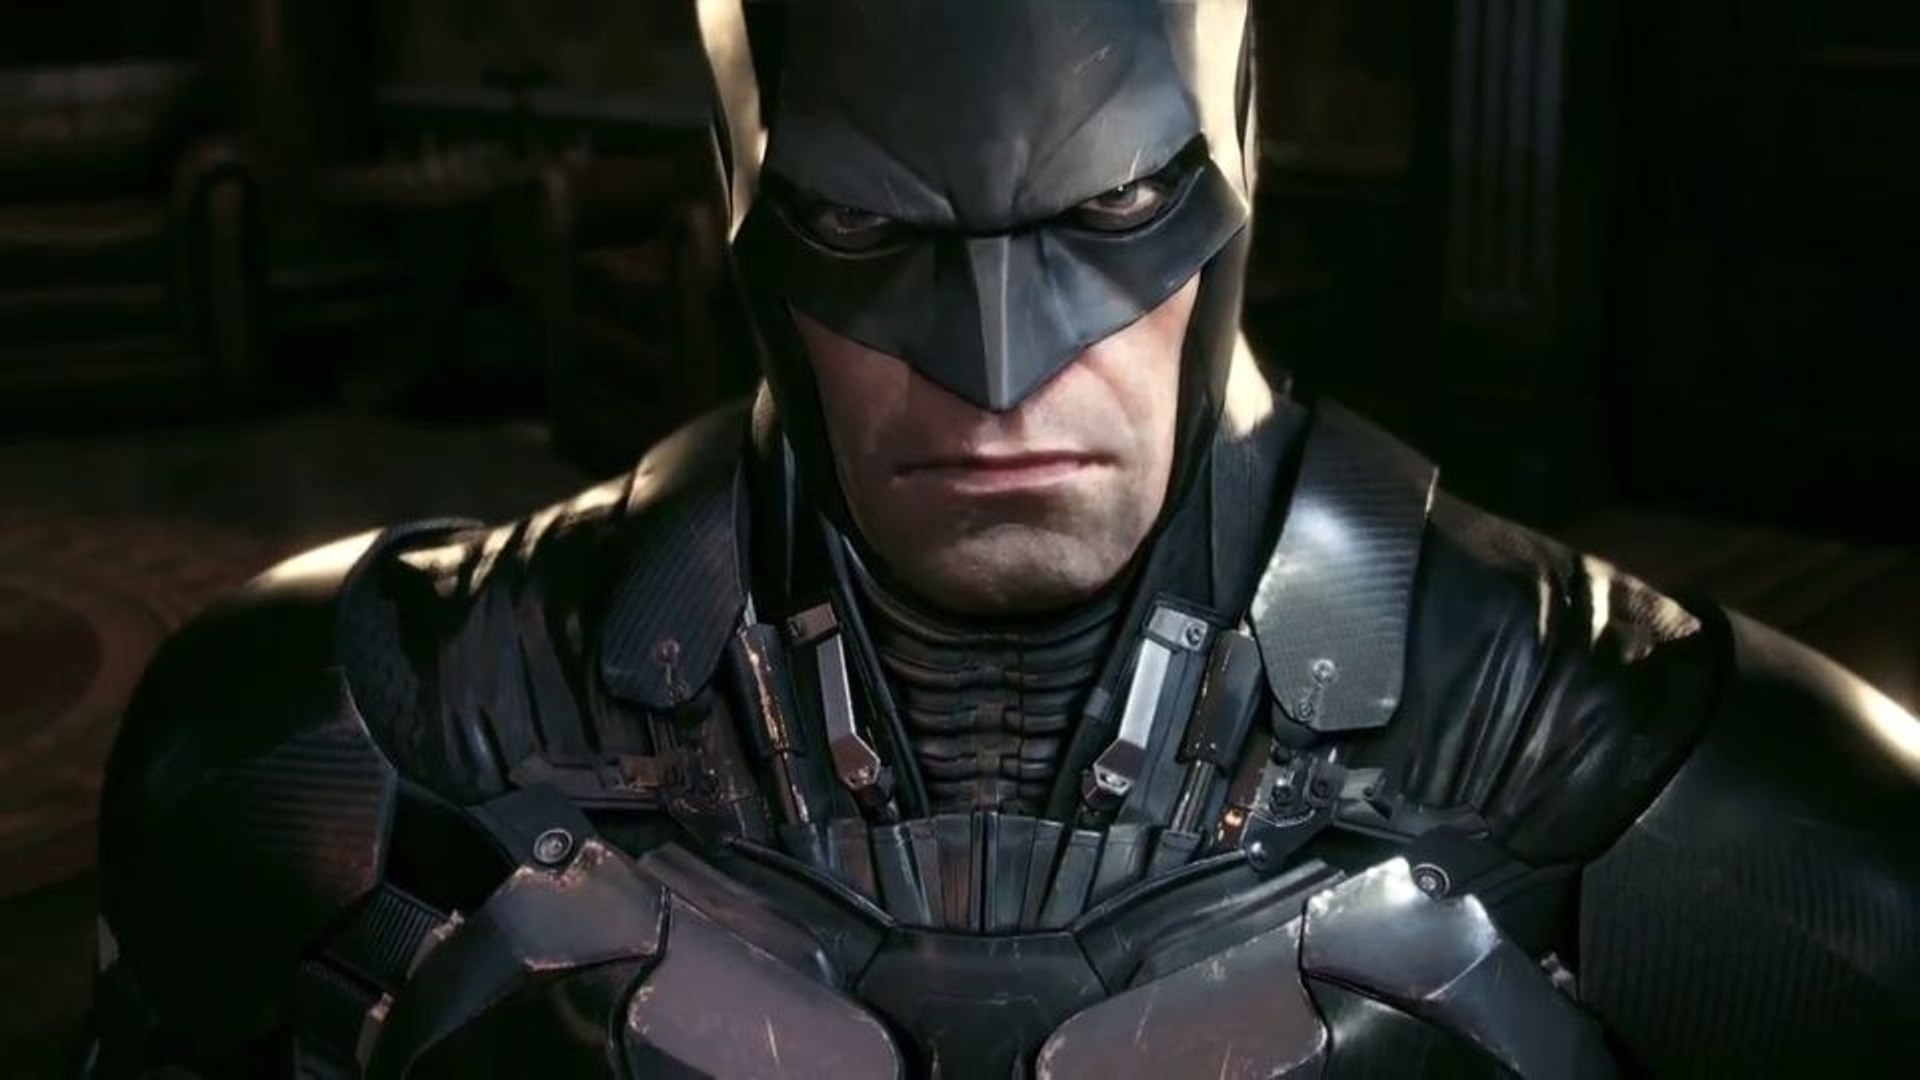 Batman arkham knight walkthrough part 7 - video Dailymotion